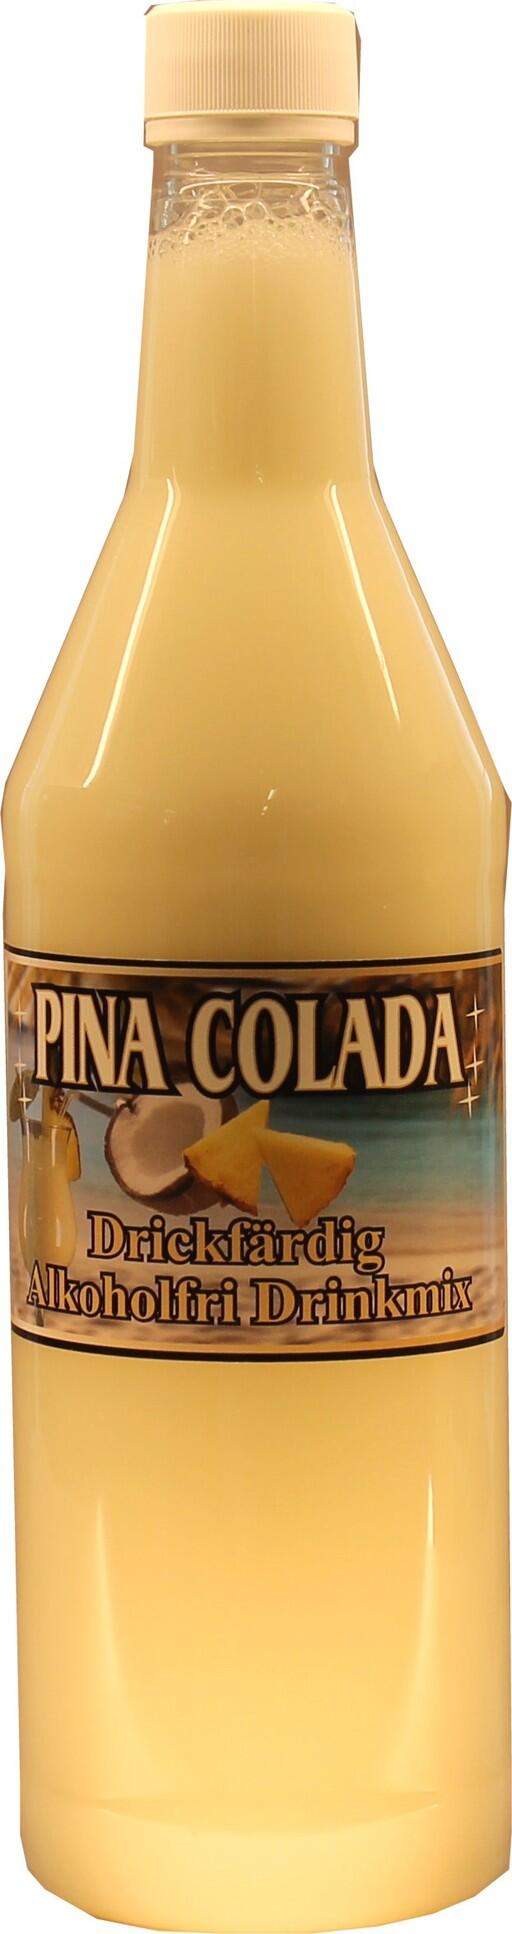 Pina Colada färdigblandad (utan alkohol).